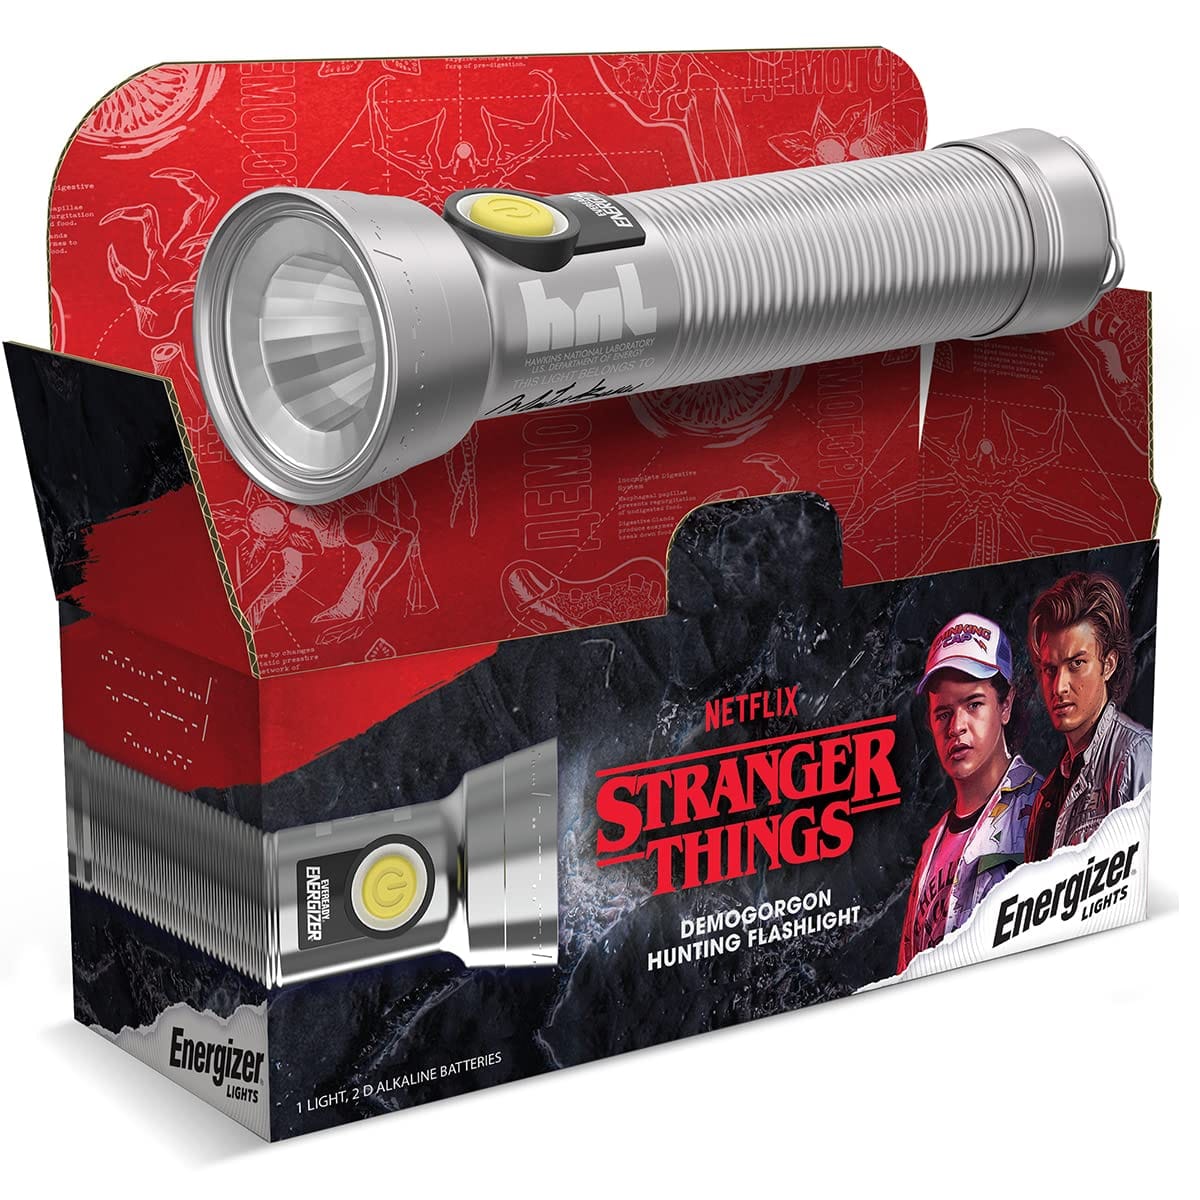 Energizer Stranger Things Demogorgon ハンティング LED 懐中電灯 限定 ビンテージ コレクターズエディション 電池付属 